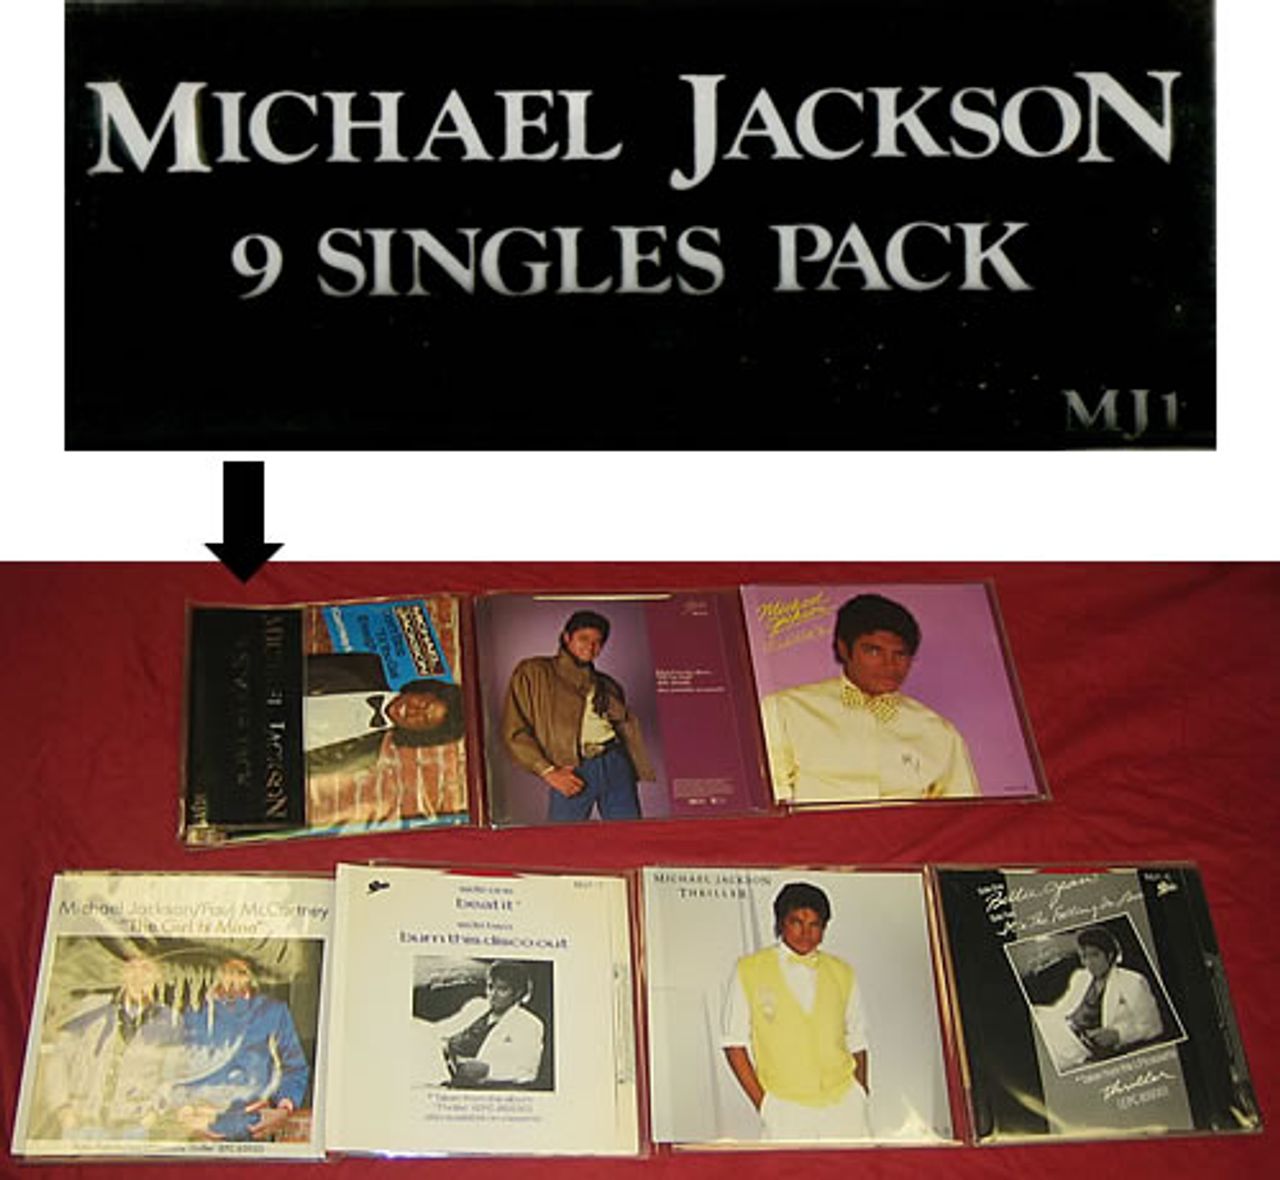 Michael Jackson 9 Singles Pack - Complete - EX UK 7